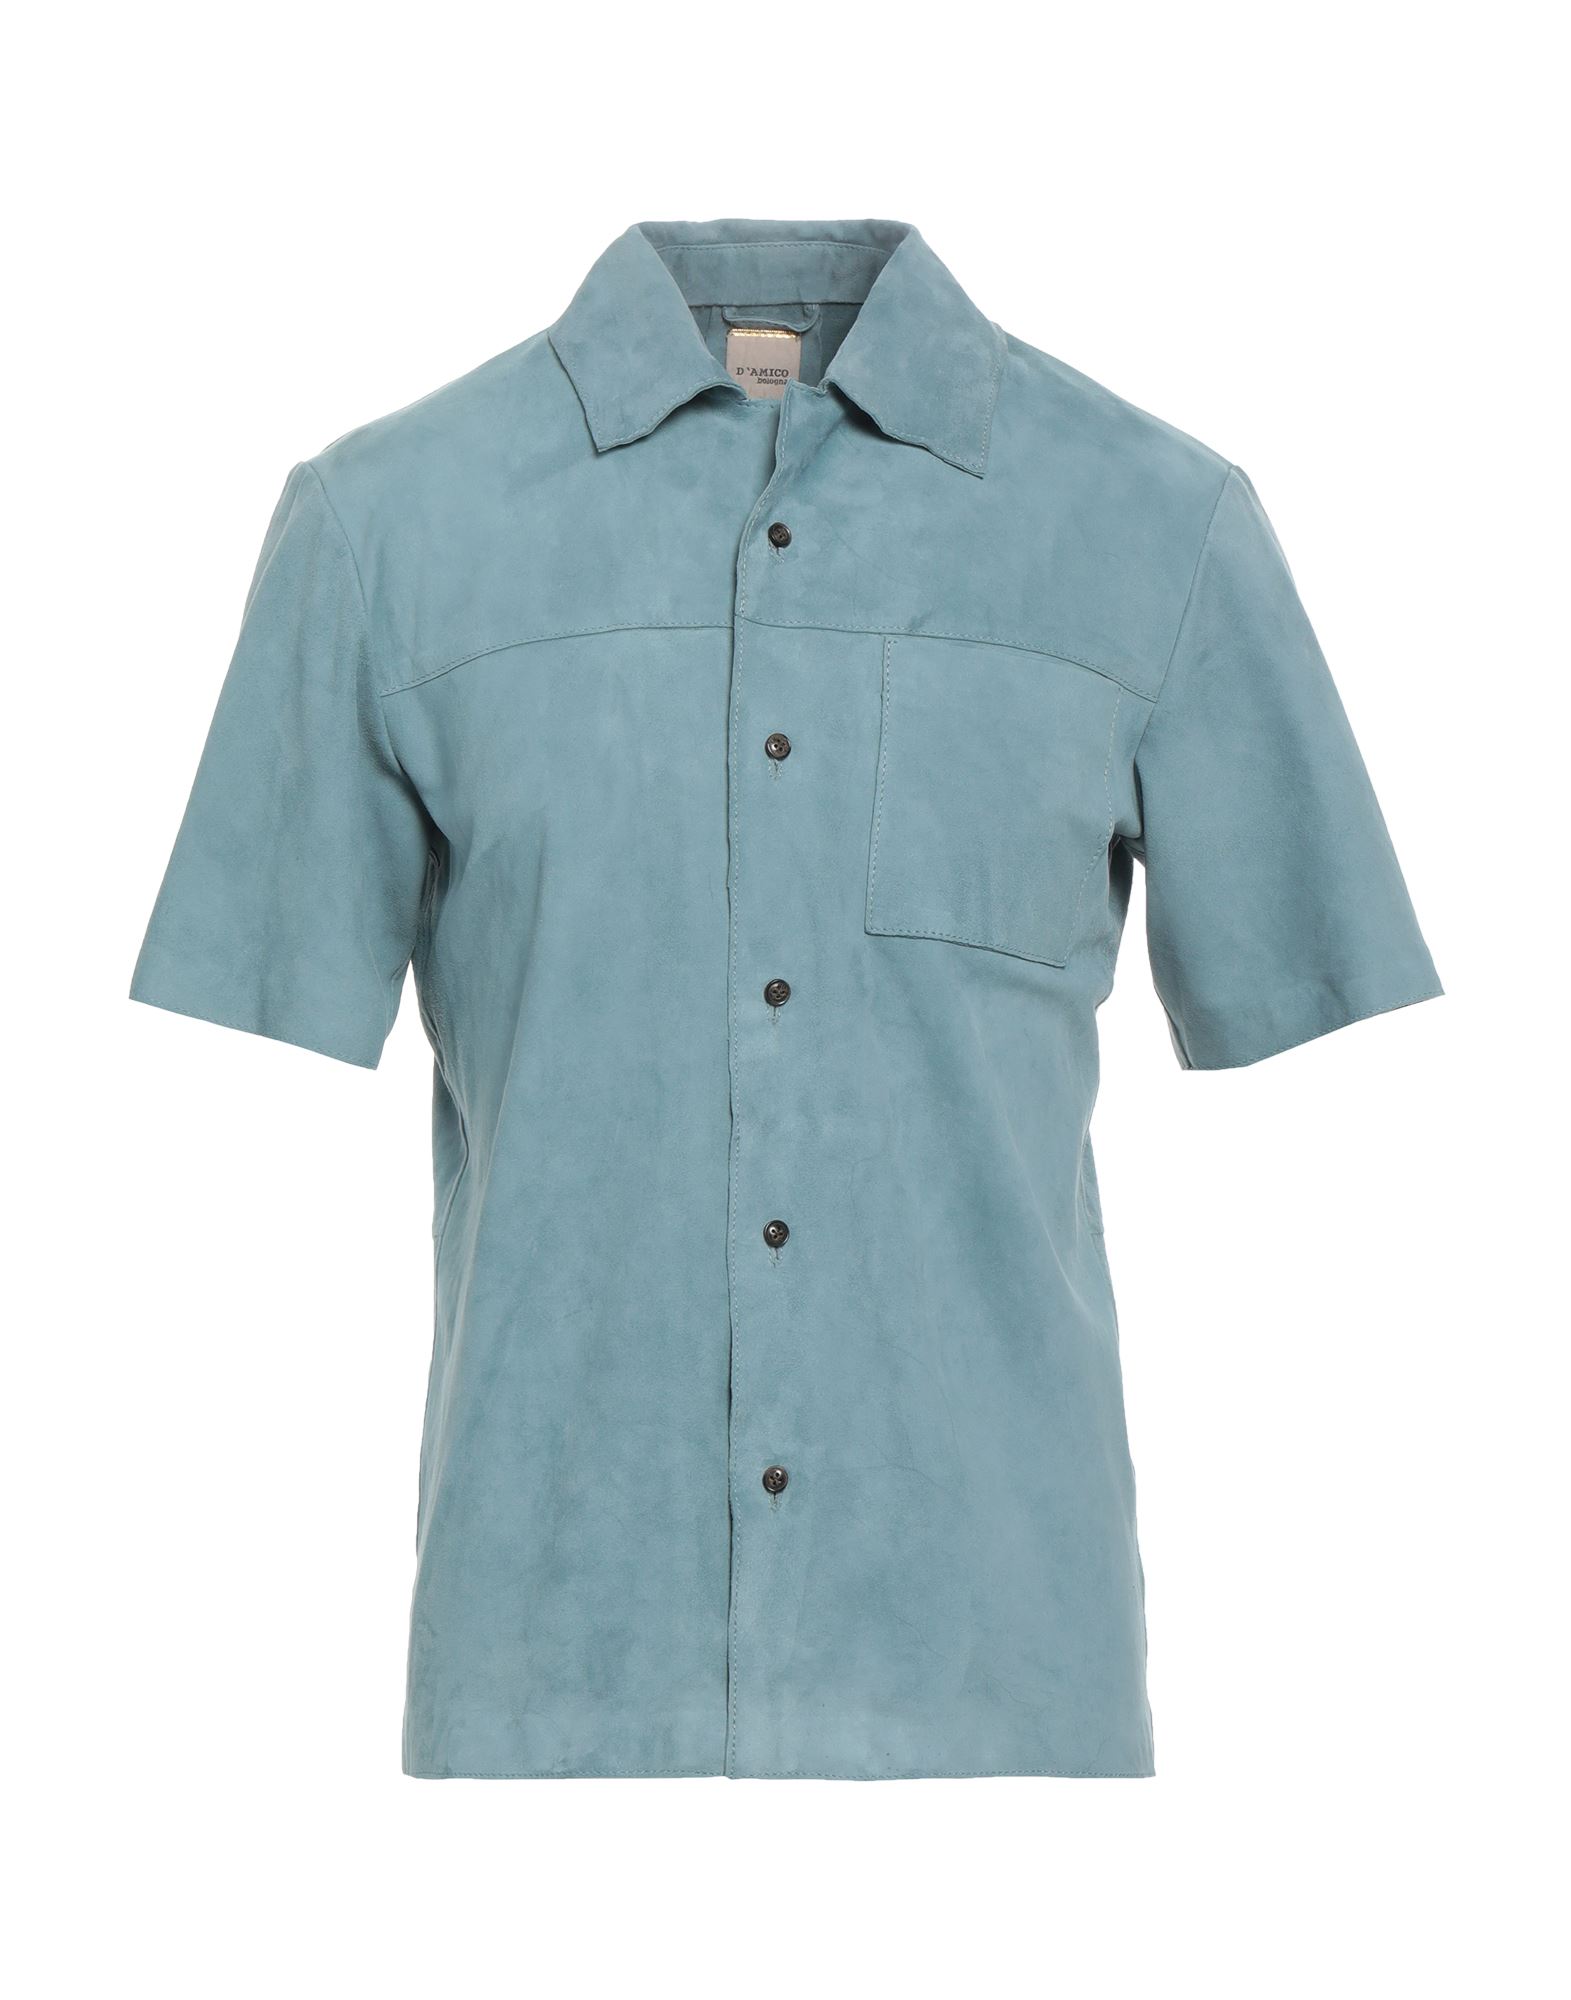 Andrea D'amico Man Shirt Pastel Blue Size 48 Soft Leather